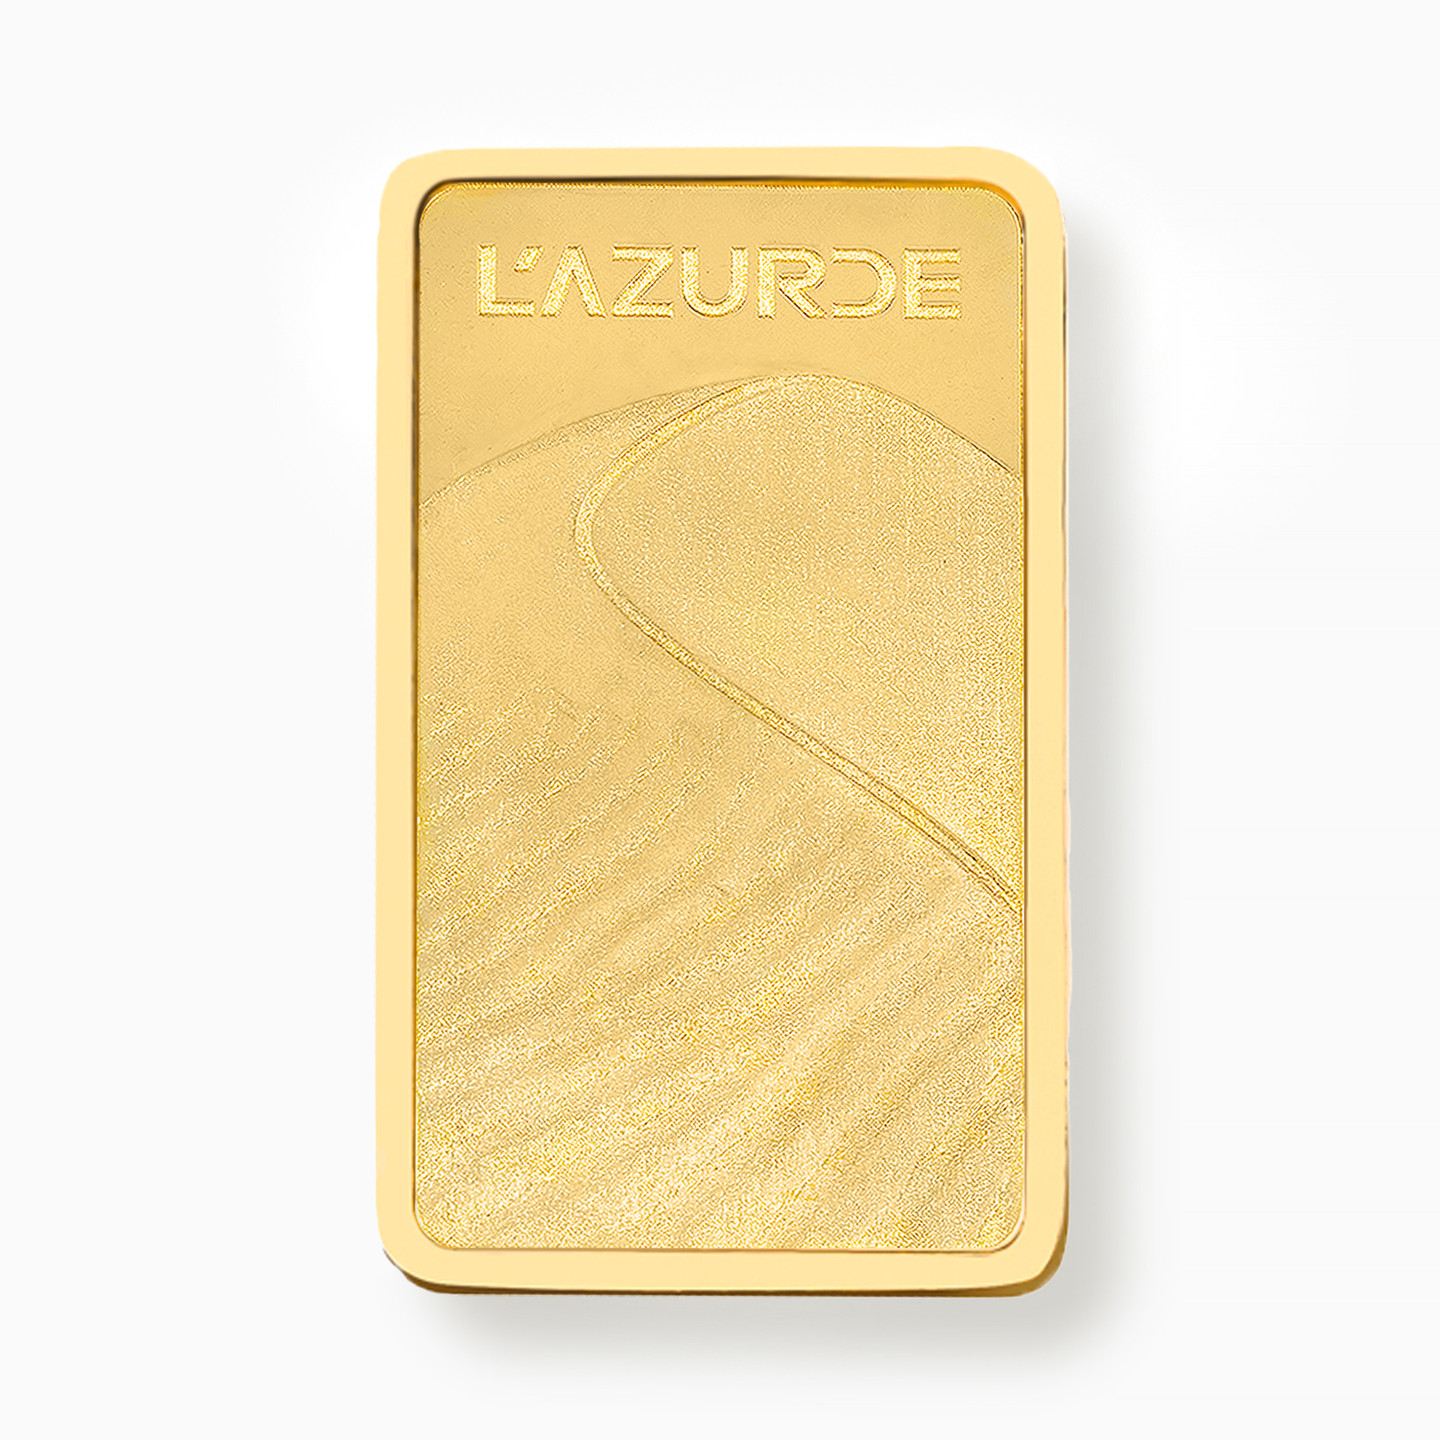 24K Gold Bar 2.5g - 2